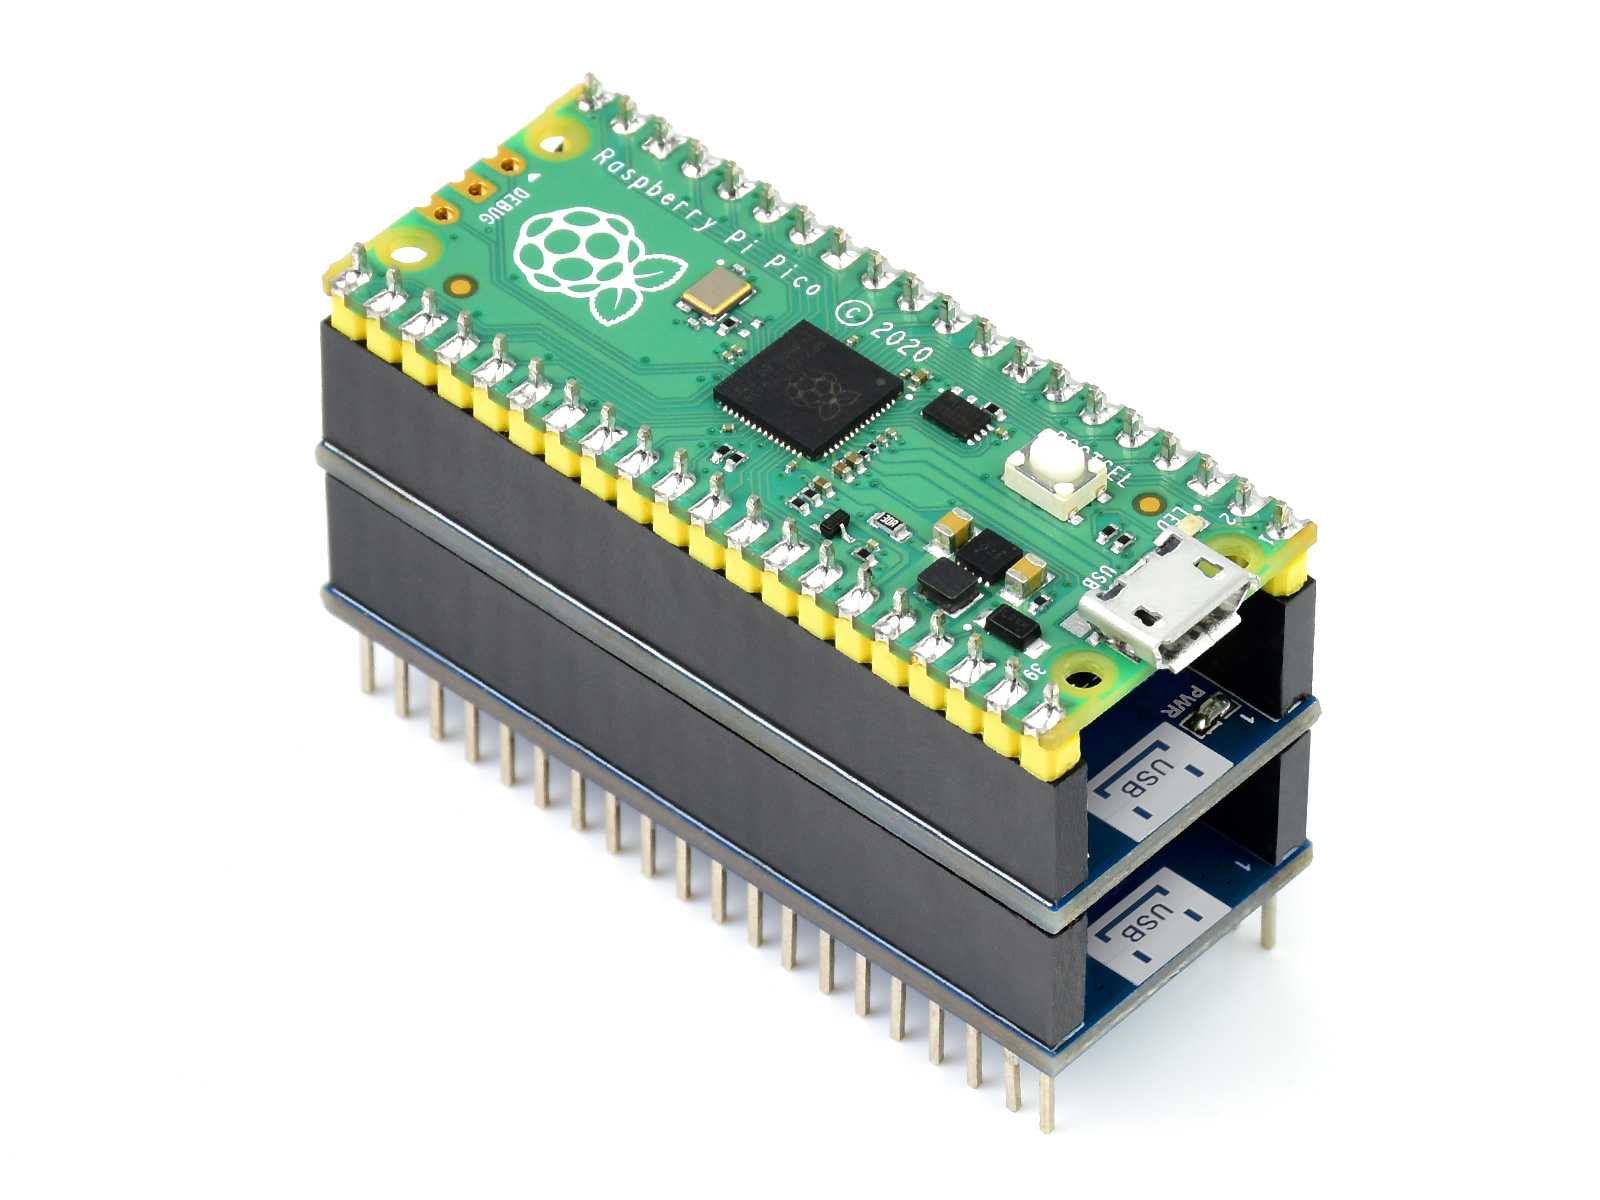 Precision RTC Module for Raspberry Pi Pico, Onboard DS3231 Chip